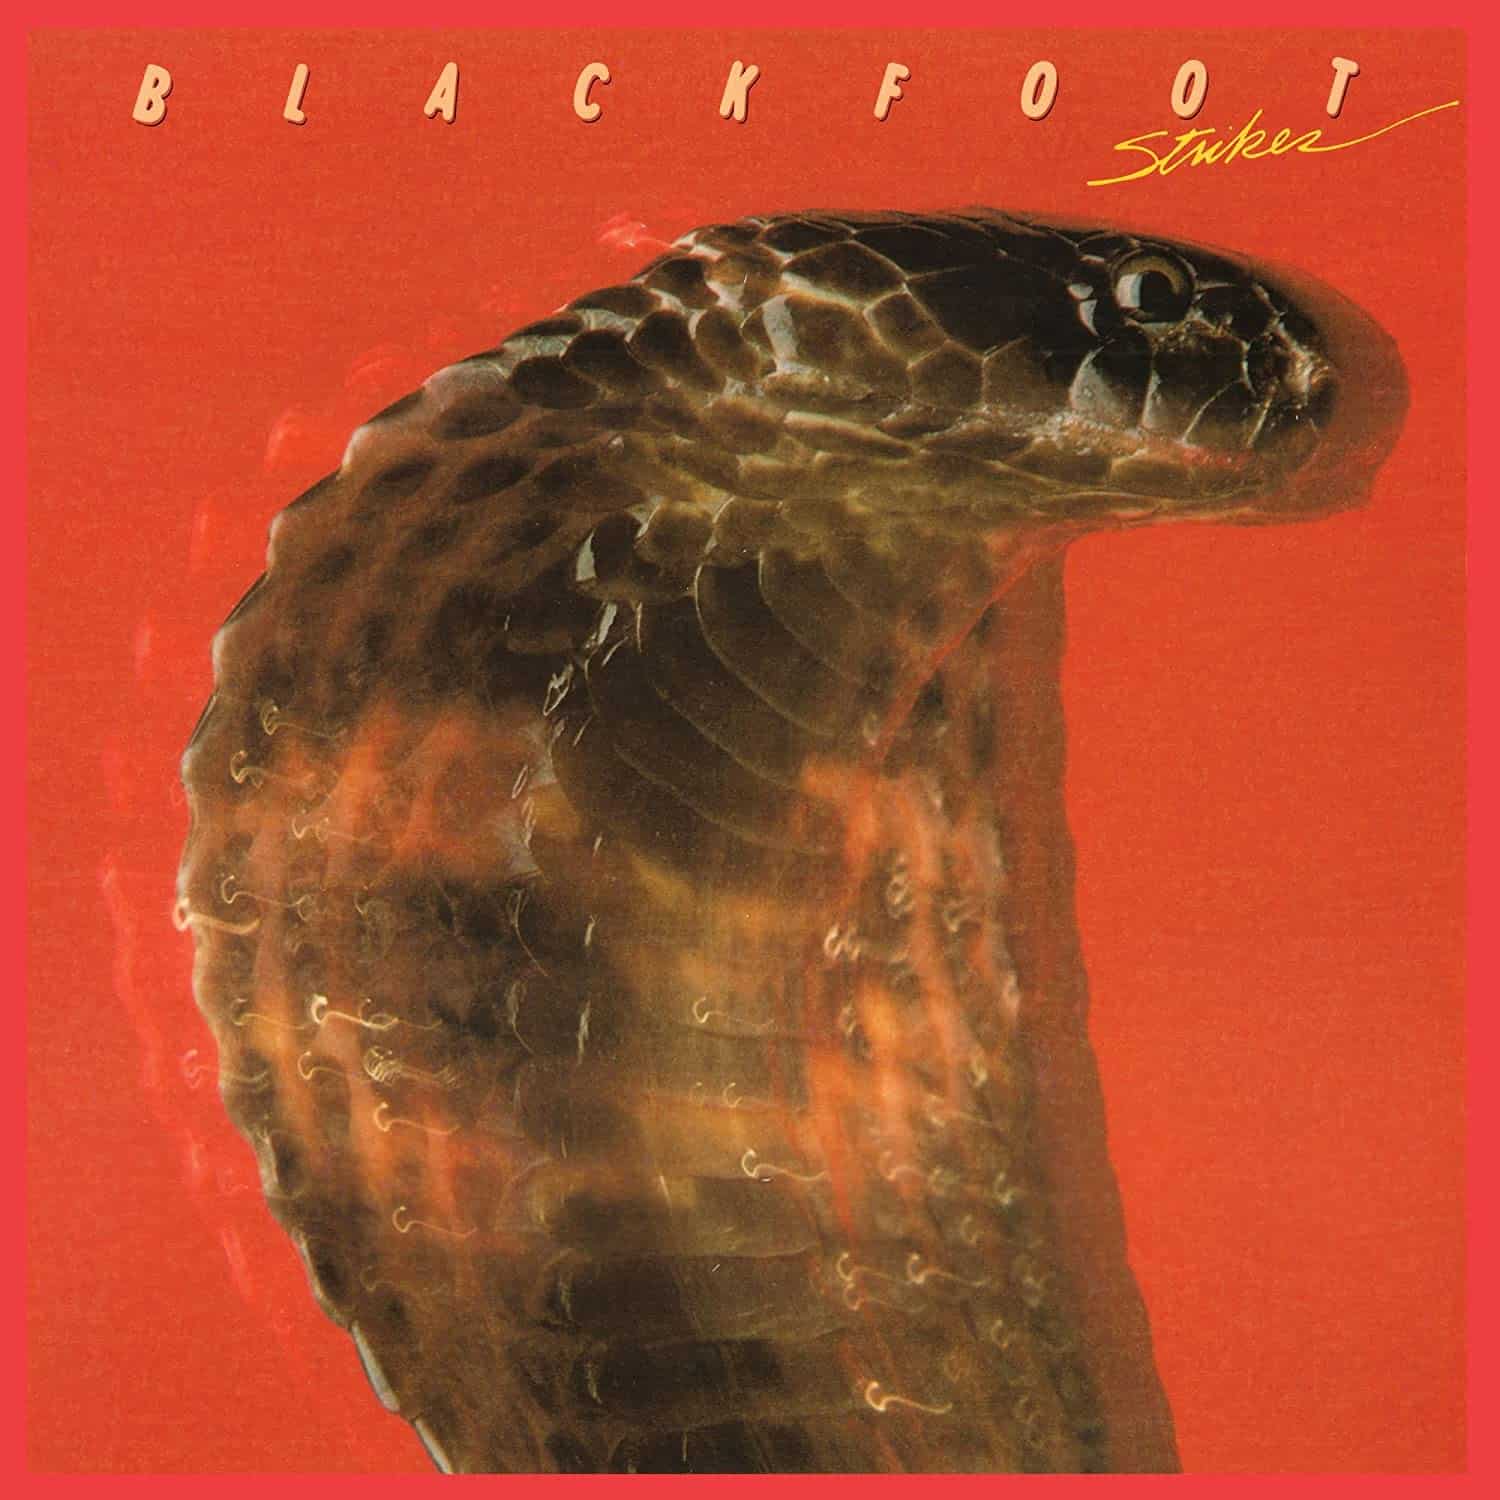 blackfoot-strikes-vinyl-record-album-LP-front